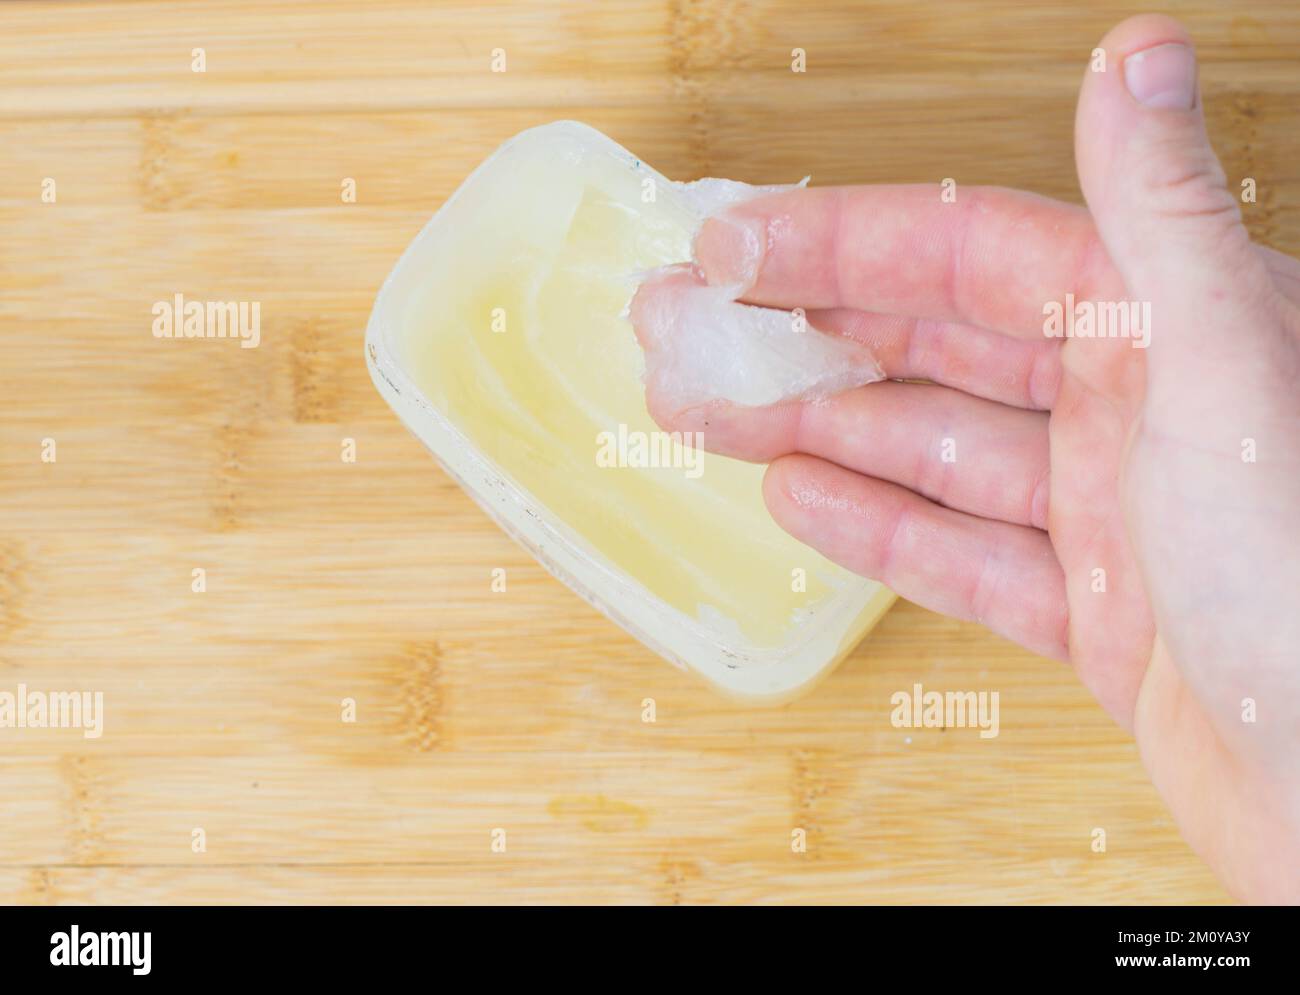 vaseline for hands moisturizer, self care copy space image concept Stock Photo